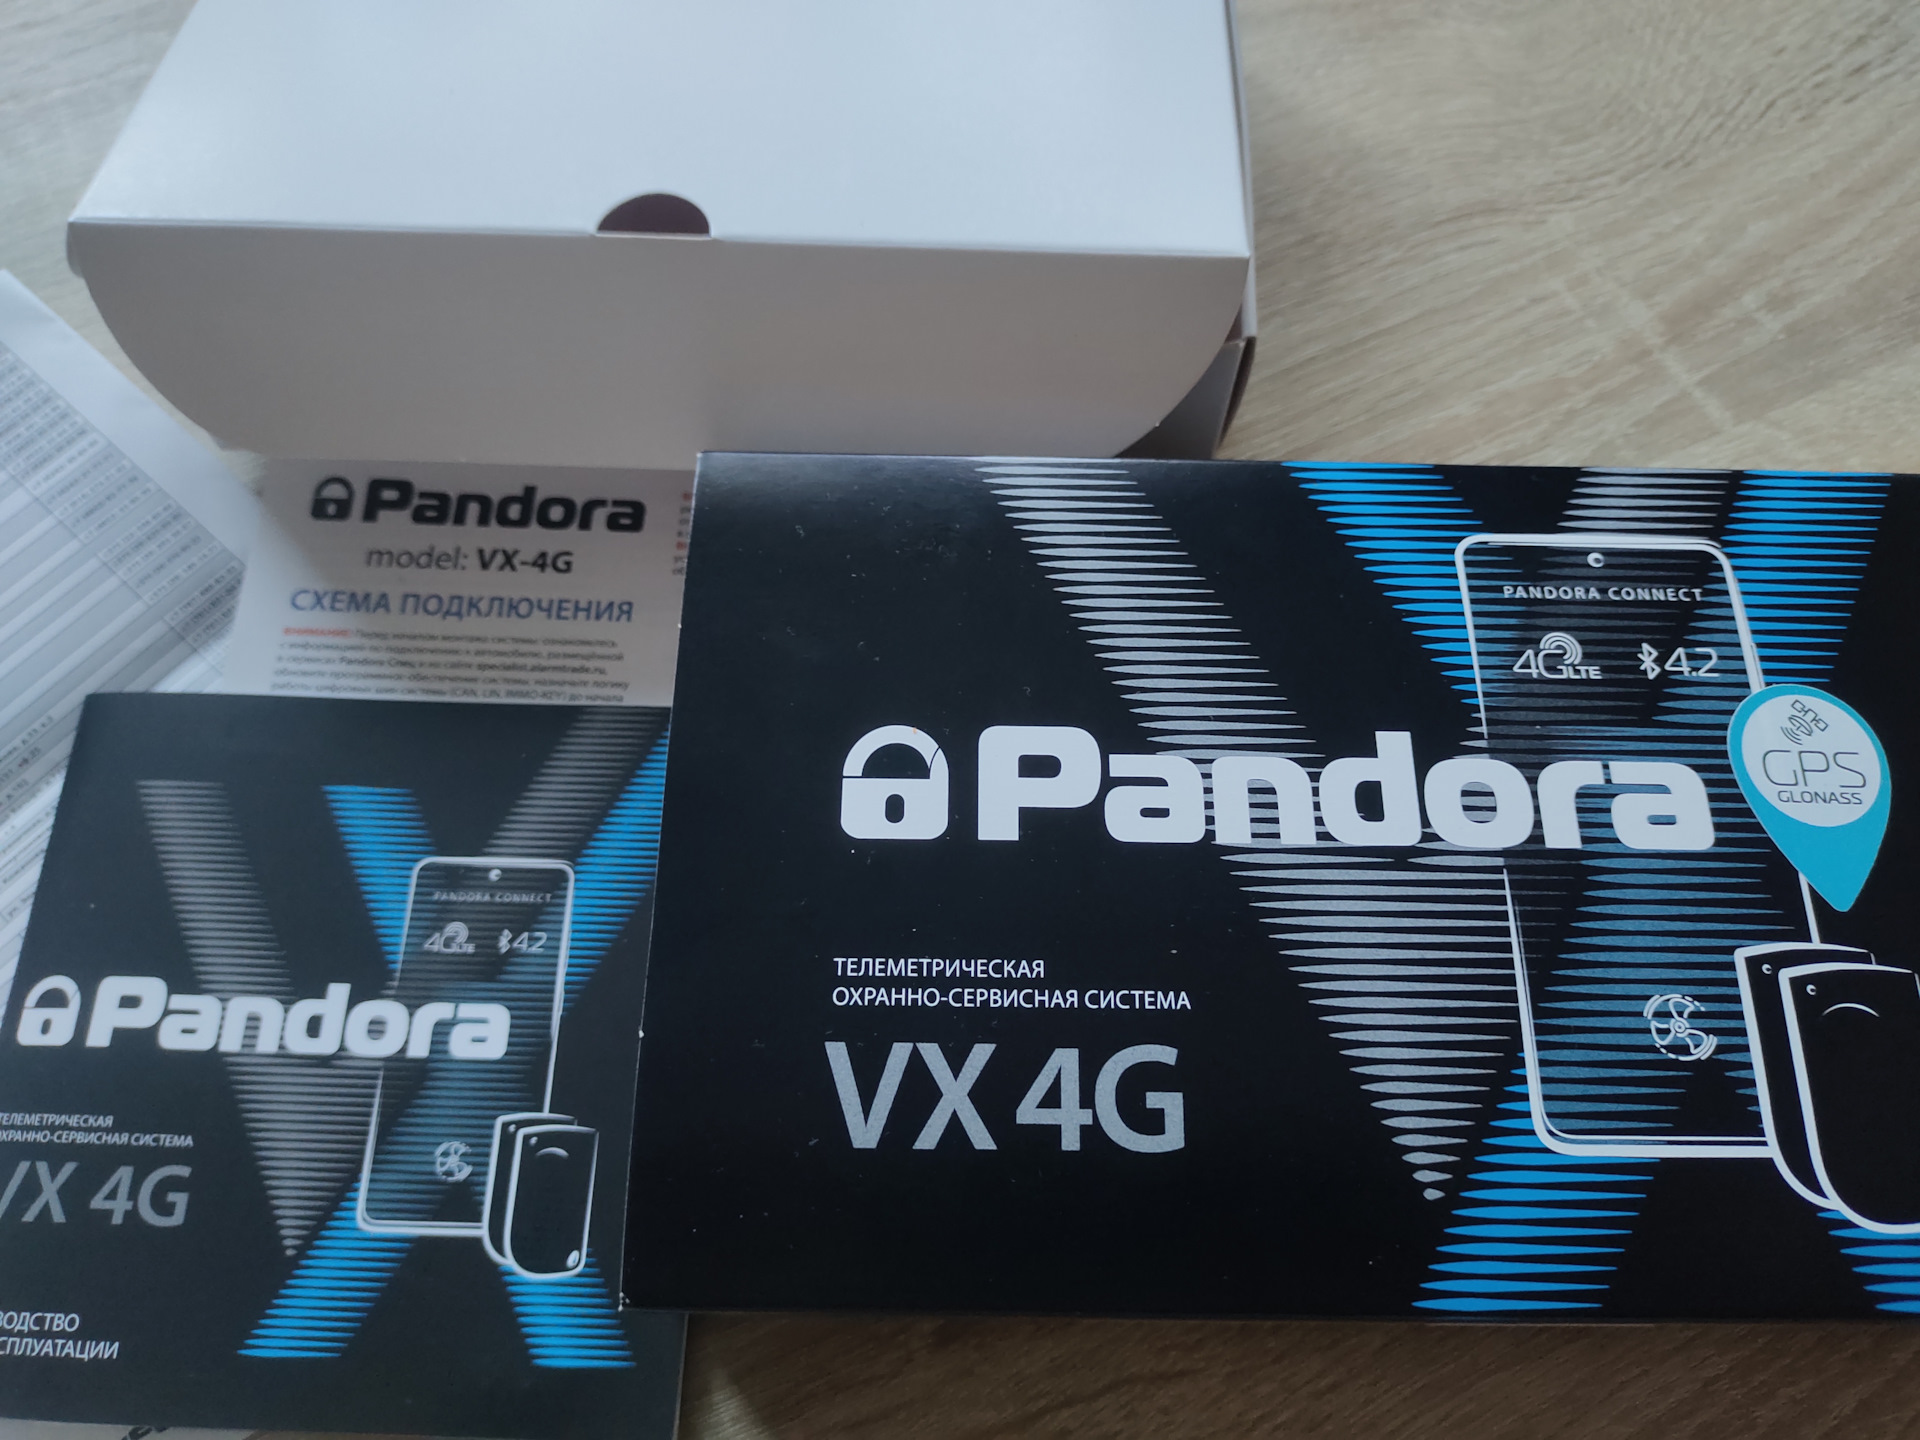 Pandora 4g gps v3. Пандора VX 4g. Pandora VX 4g. Сигнализация Пандора vx4g. Пандора VX 4g GPS.